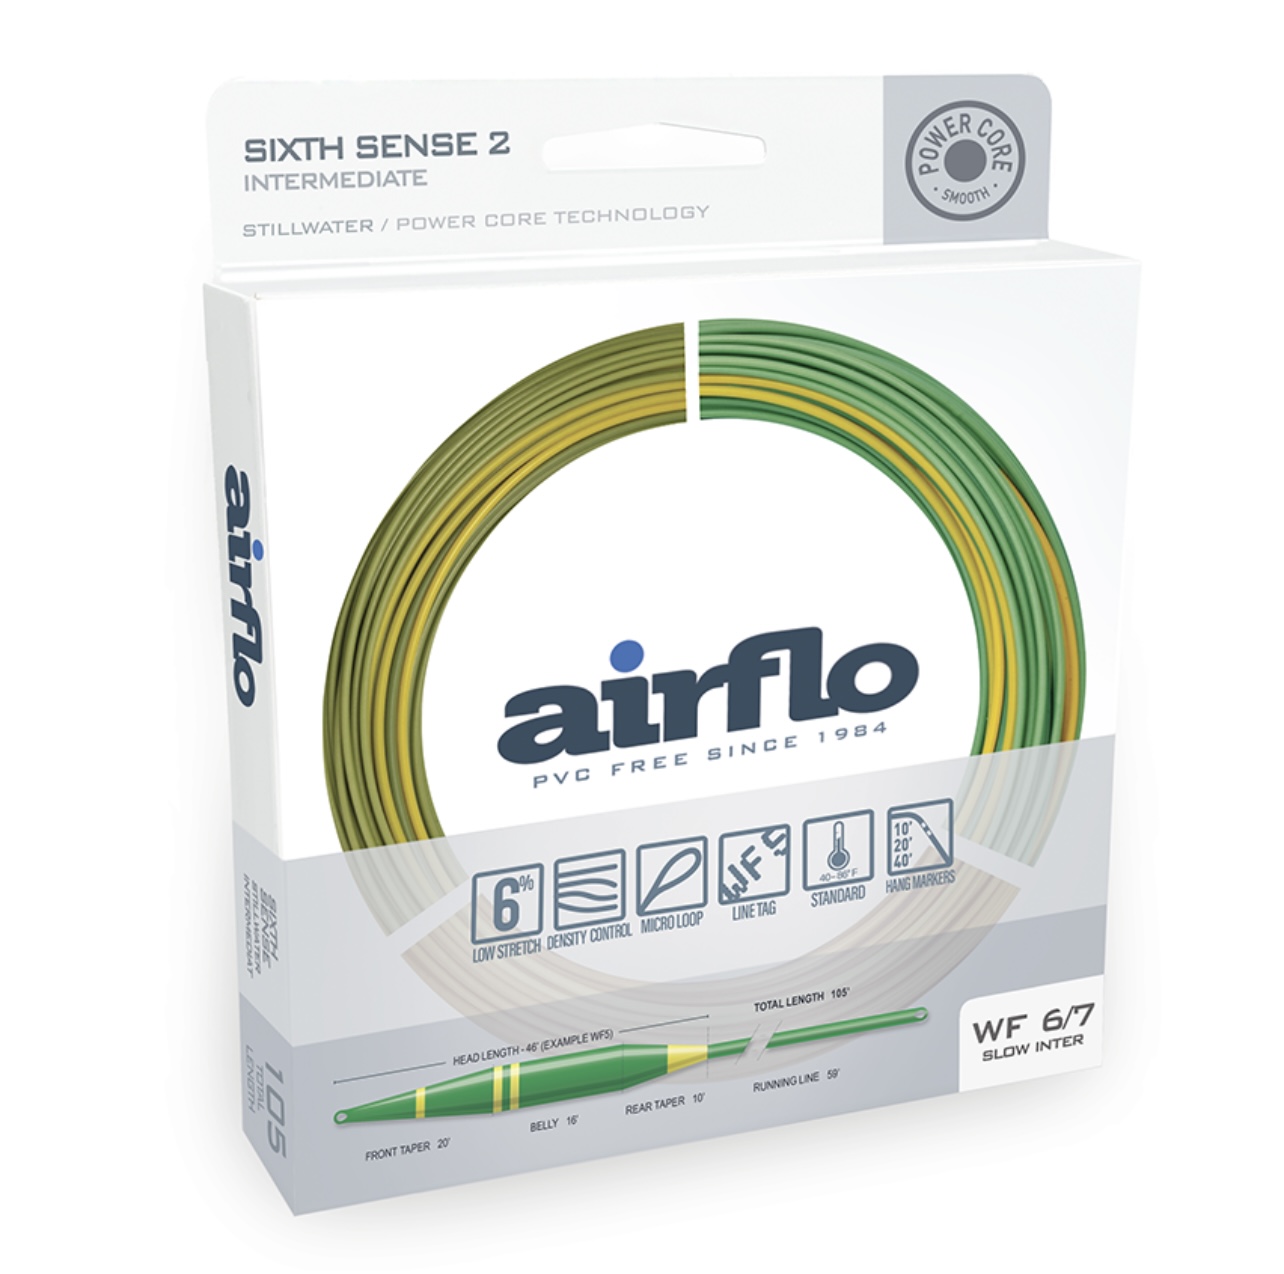 Airflo Sixth Sense 2 Intermediate